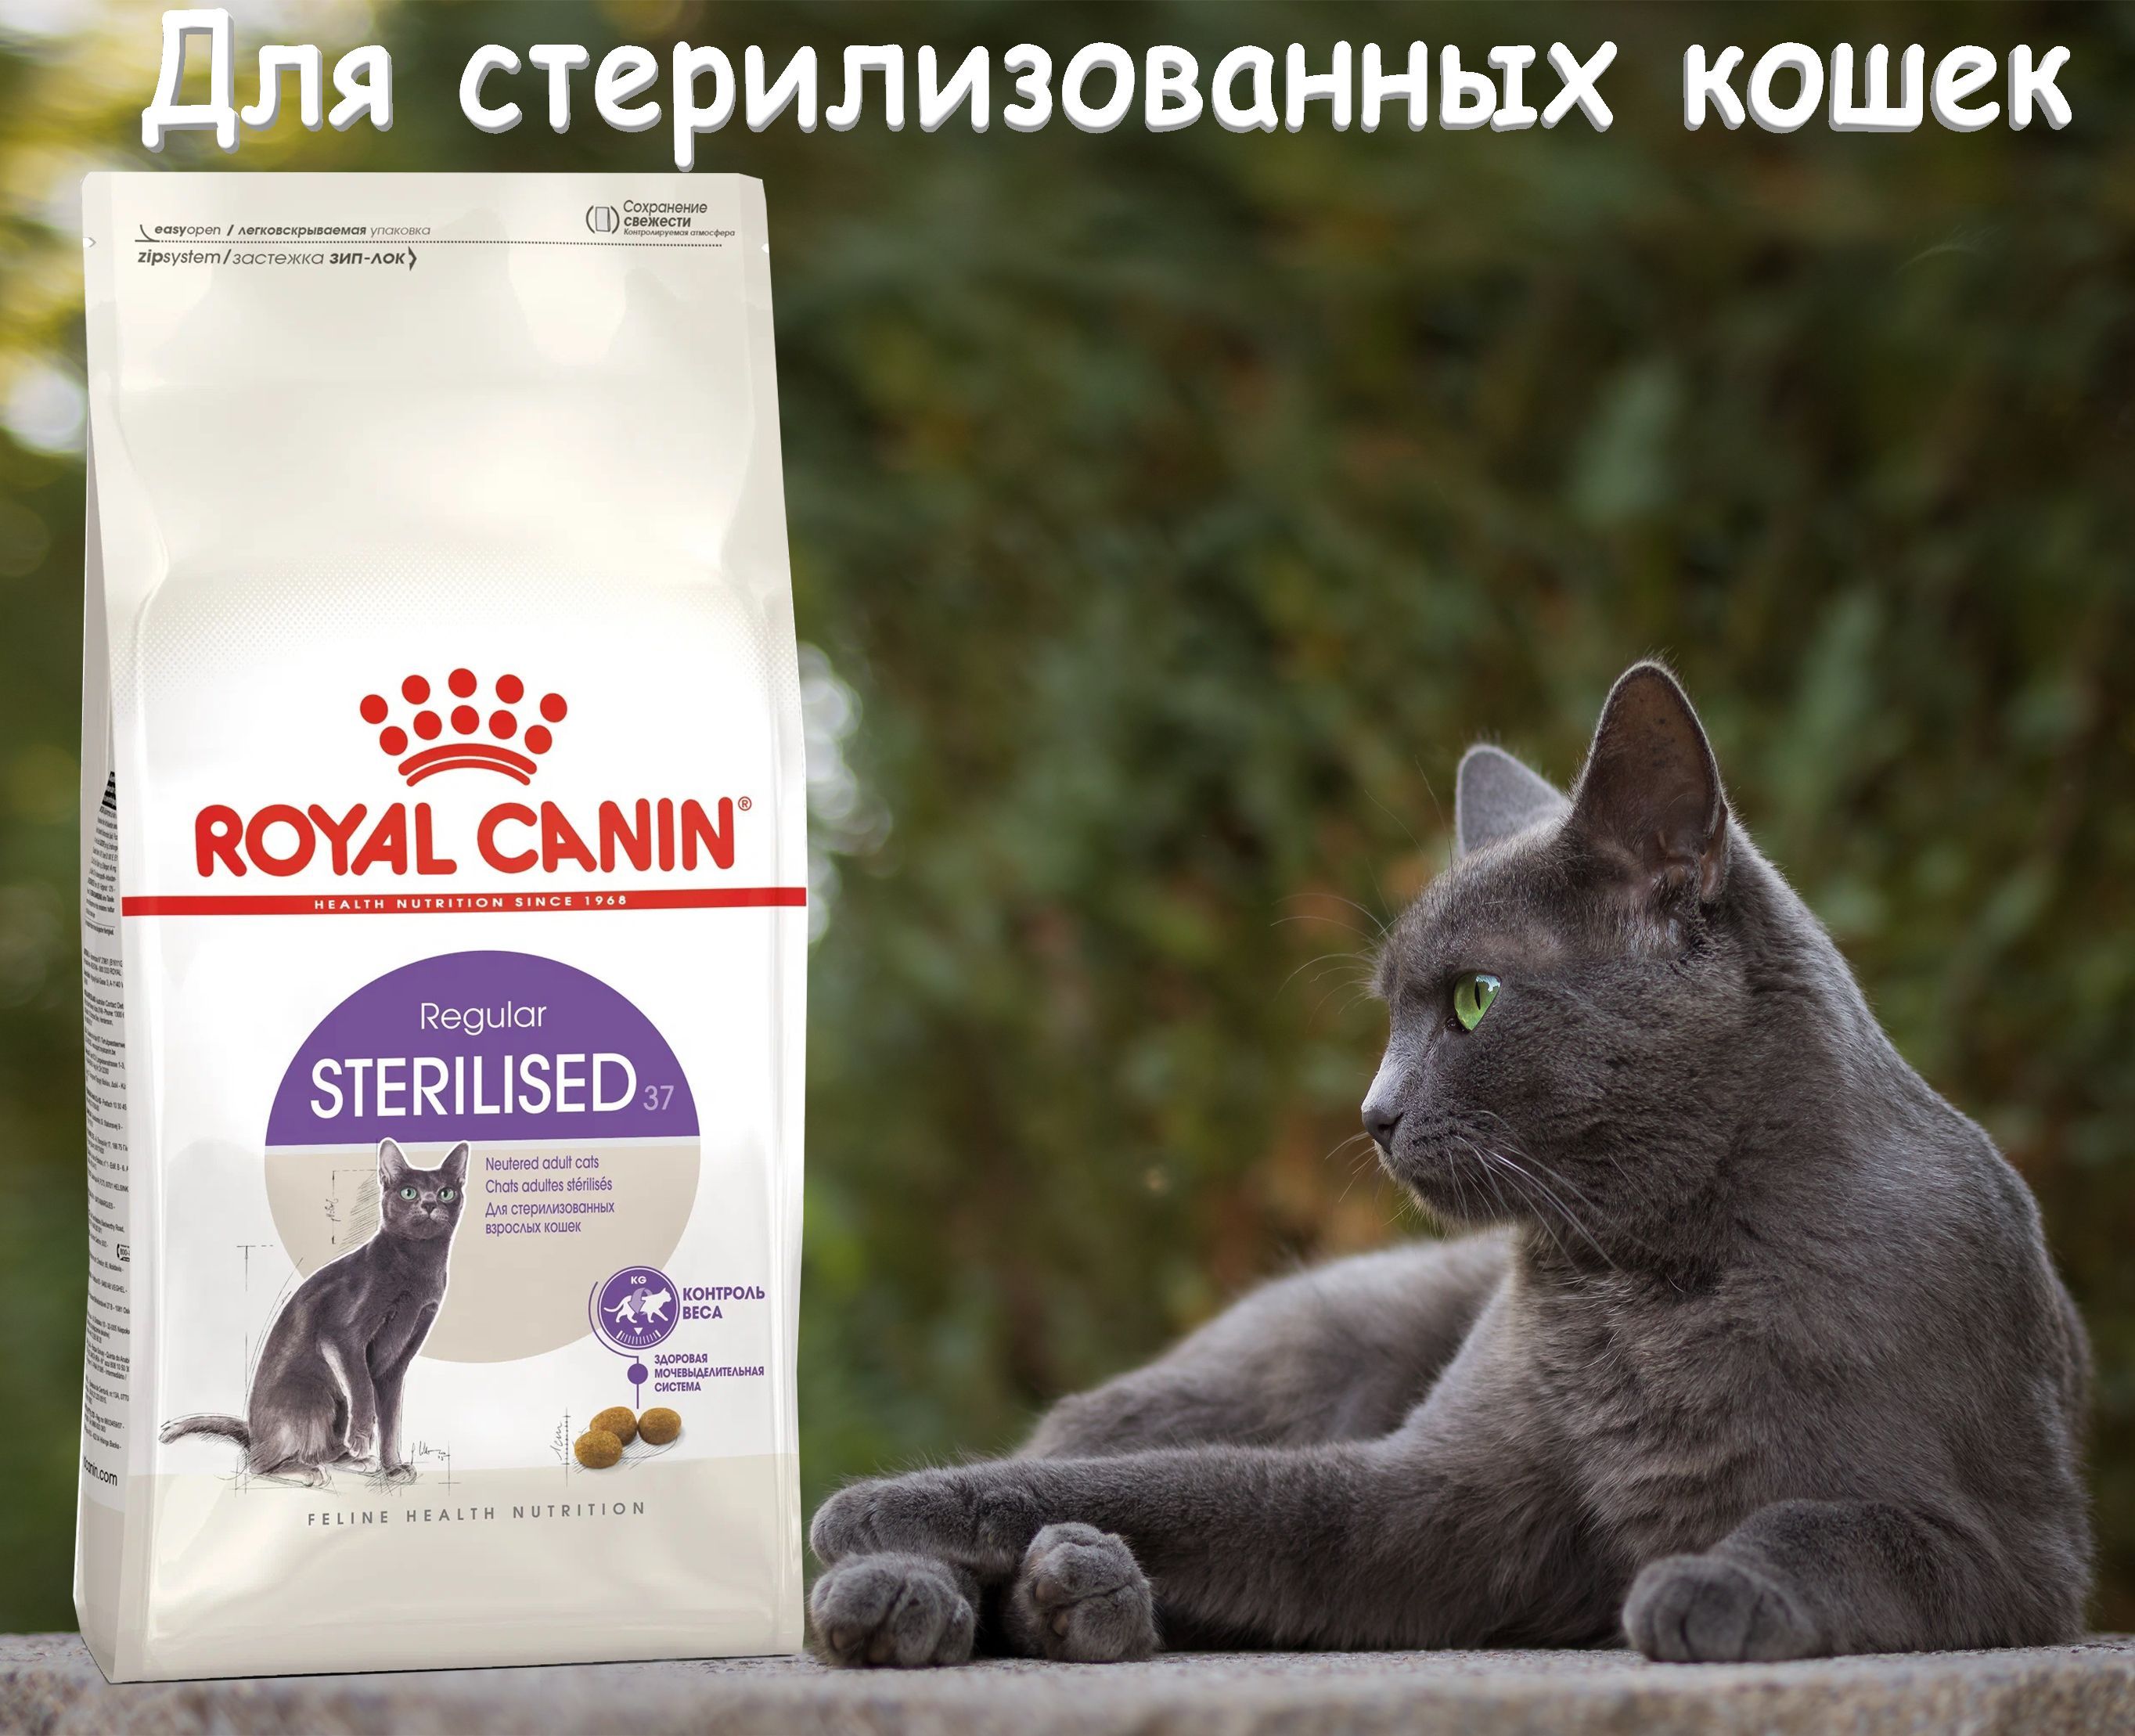 Royal canin для кошек sterilised 37. Royal Canin Sterilised 37.